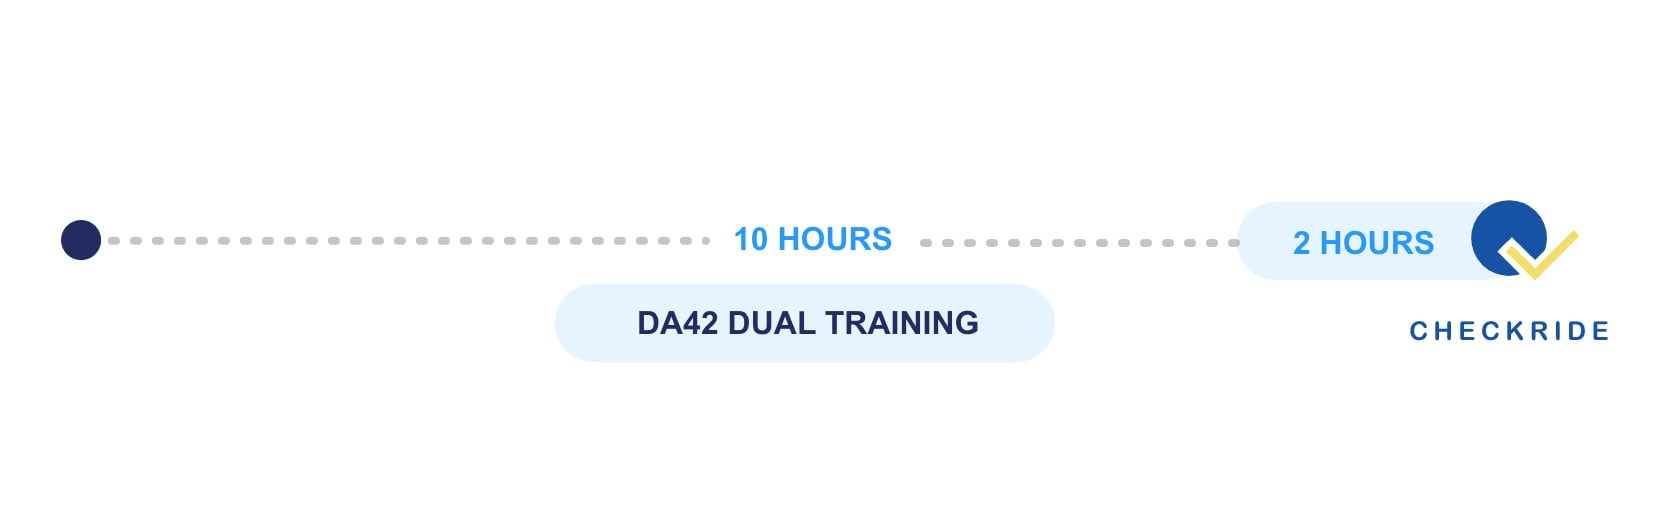 Dual Training